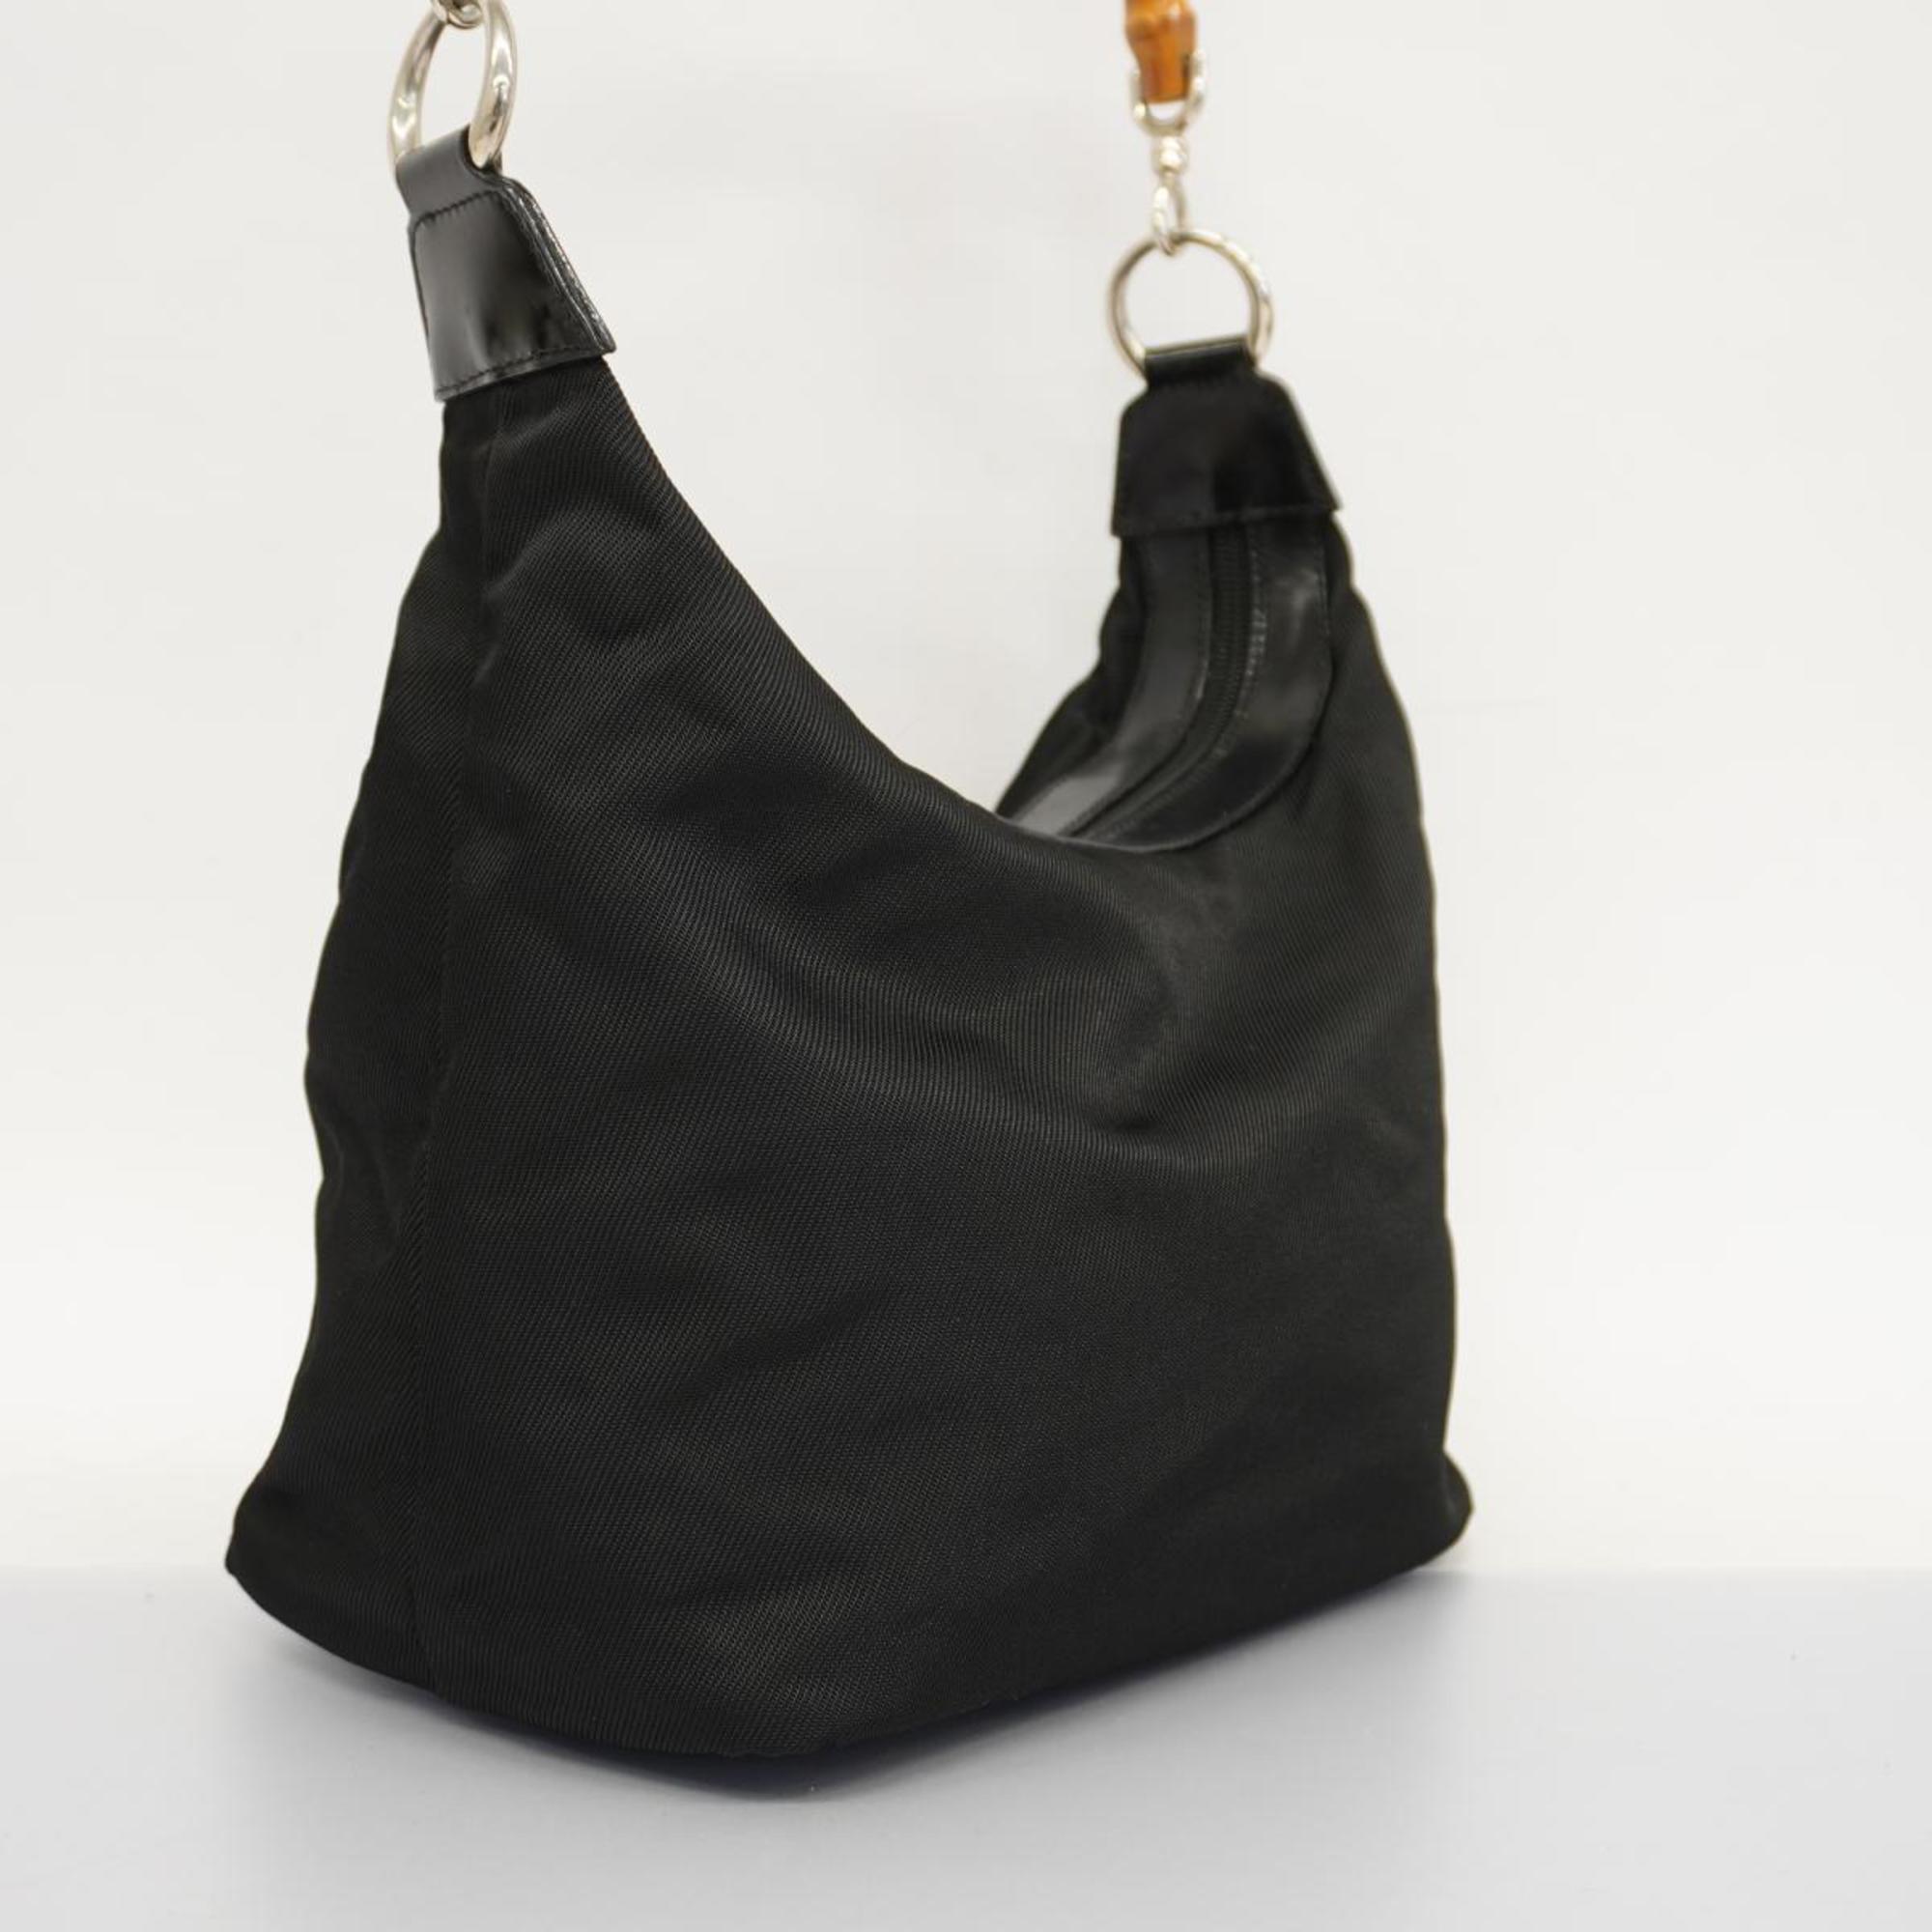 Gucci Shoulder Bag Bamboo 000 1956 0531 Nylon Black Women's